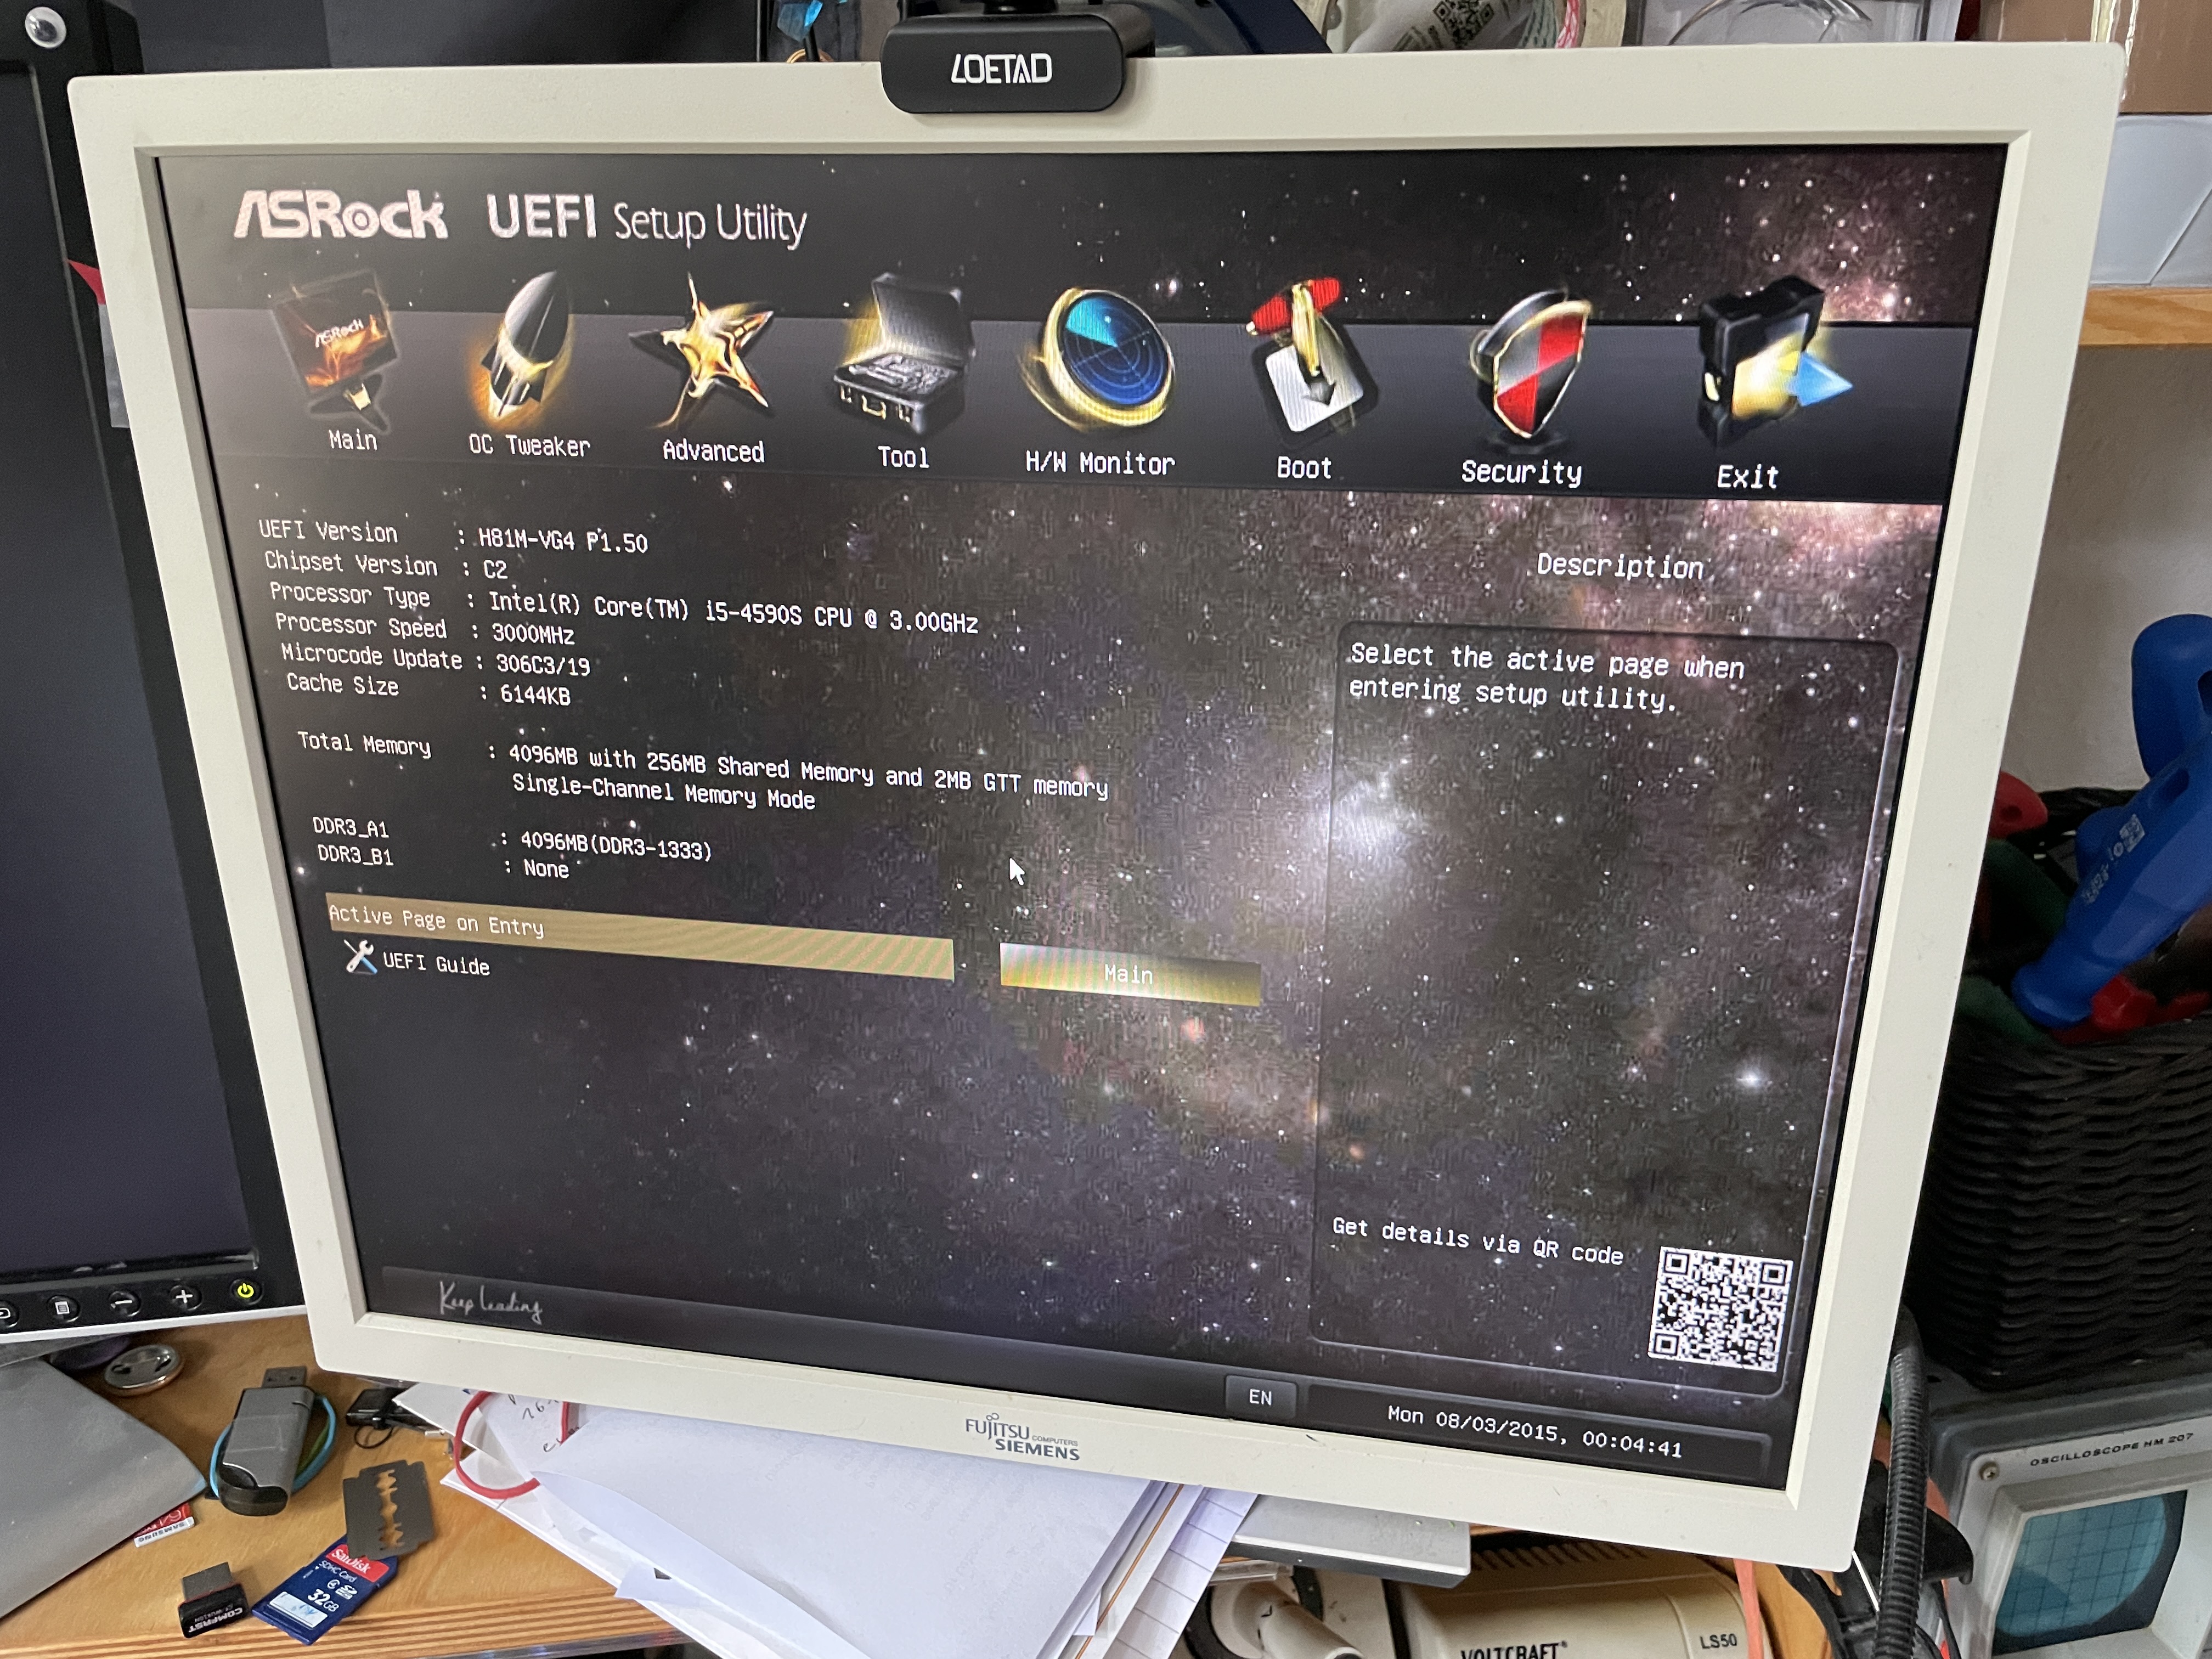 ASRock UEFI setup running on an ASUS board